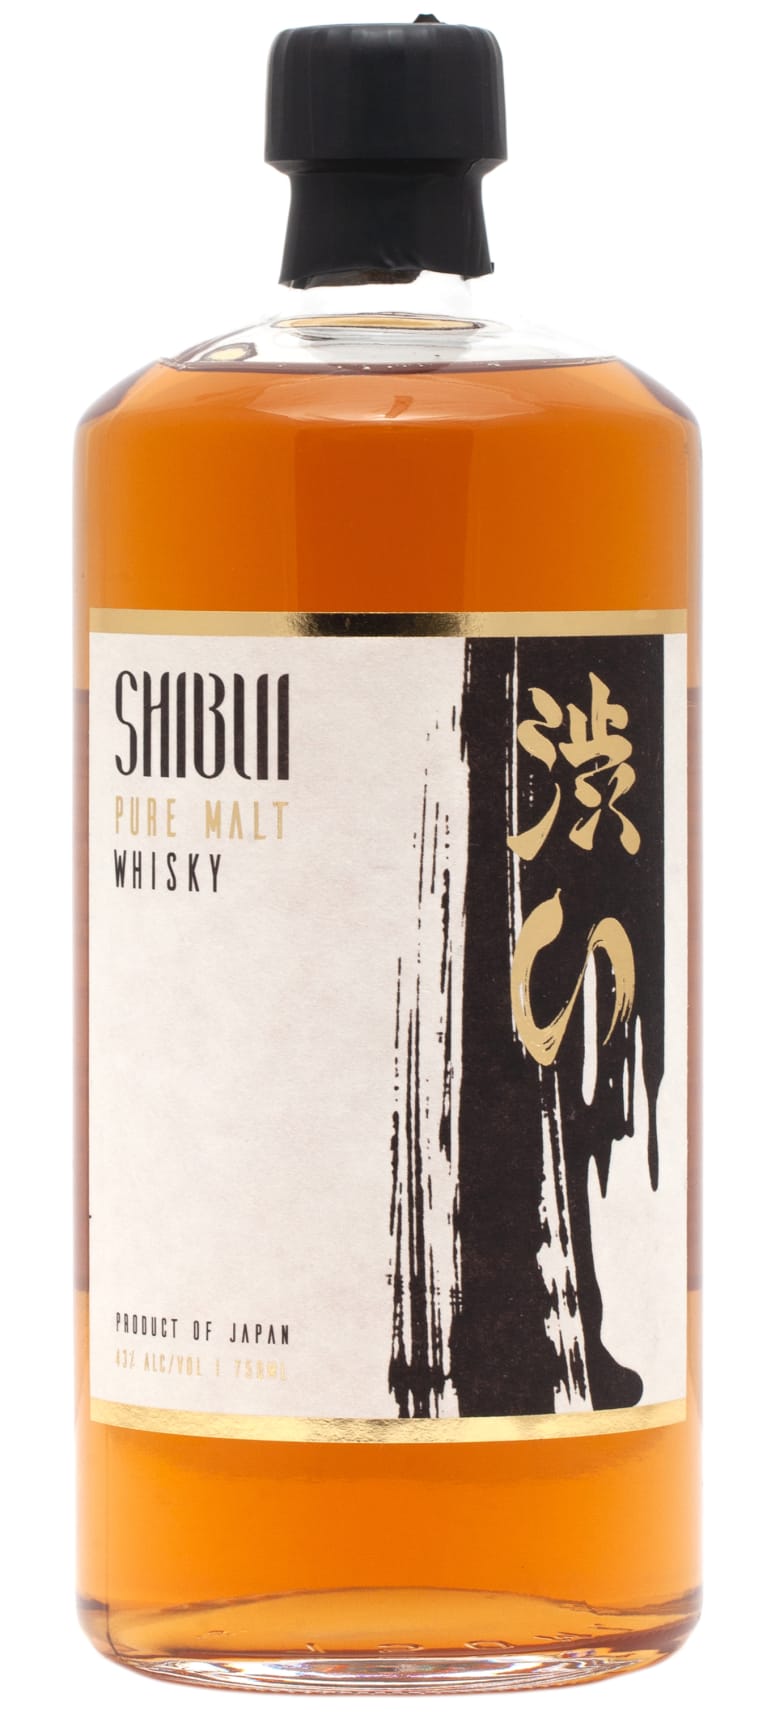 Shibui Pure Malt